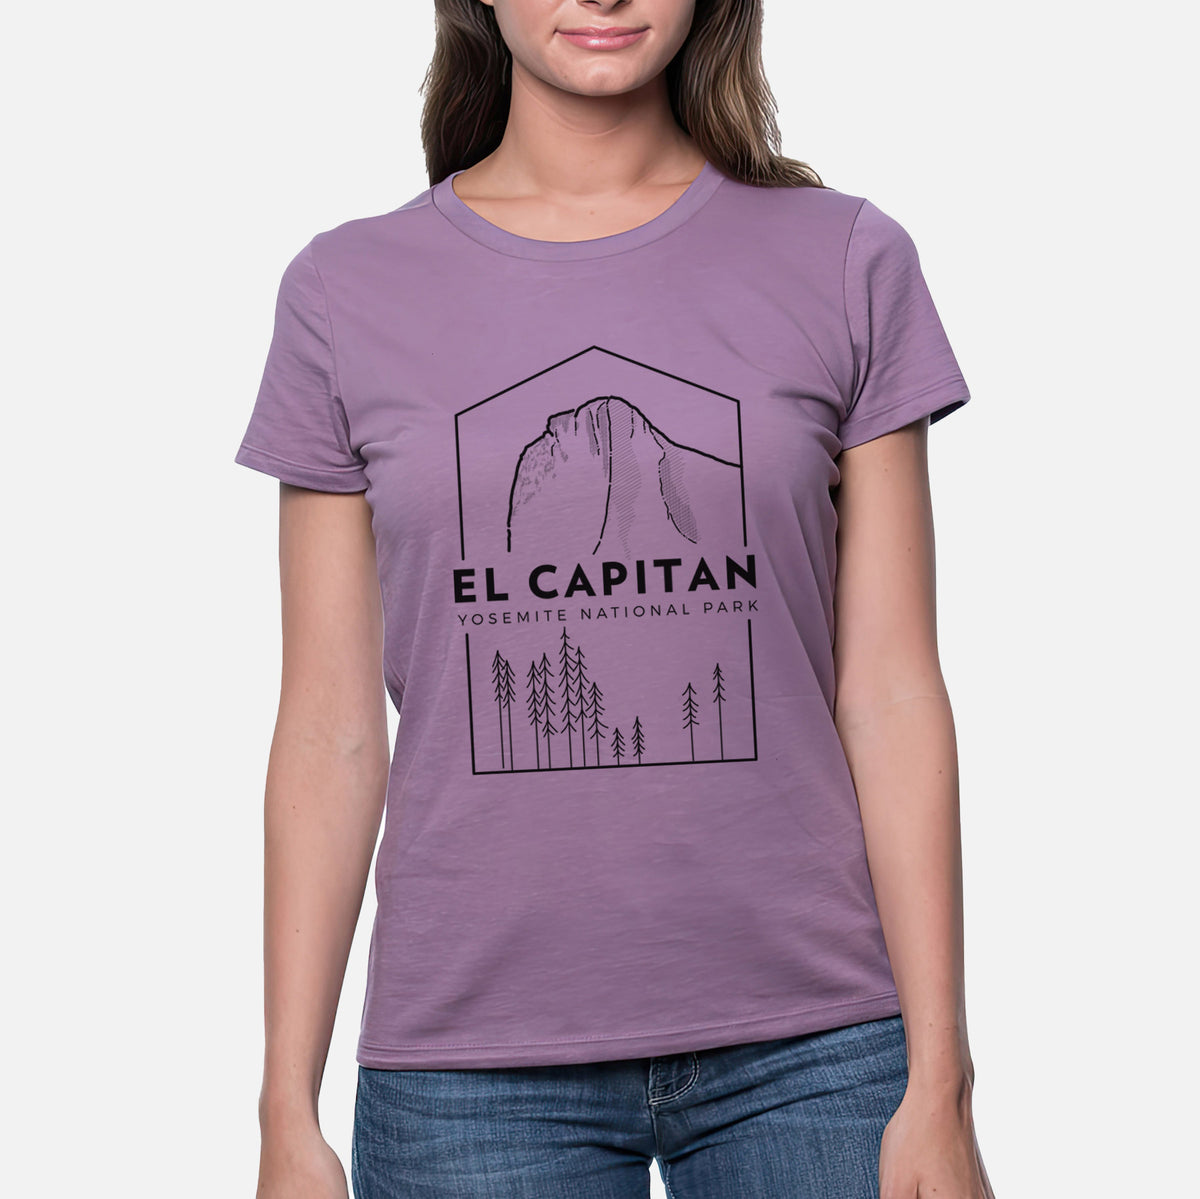 El Capitan - Yosemite National Park - Women&#39;s Crewneck - Made in USA - 100% Organic Cotton